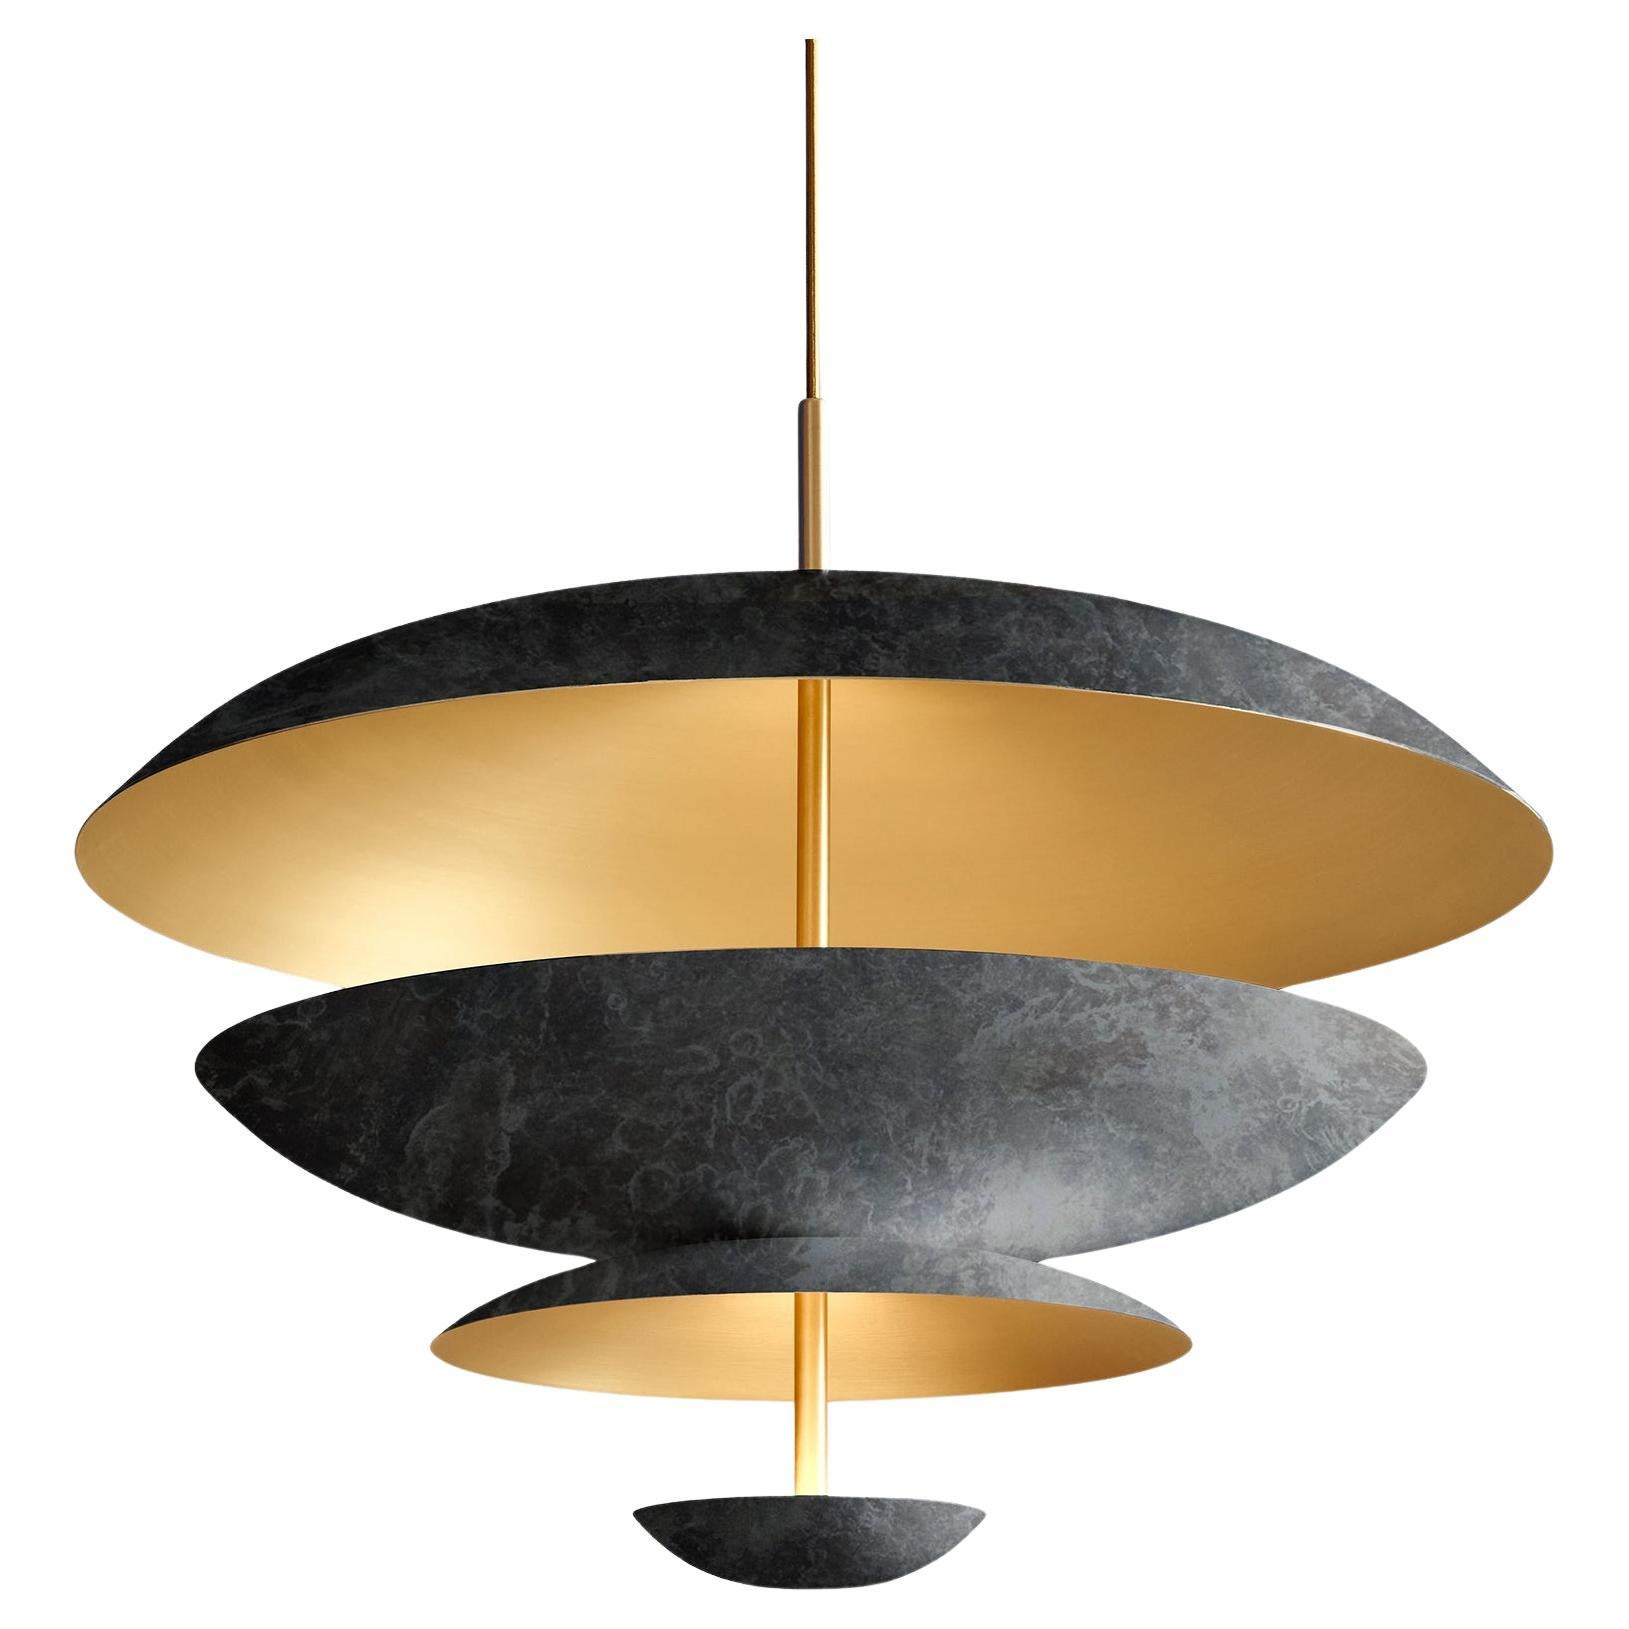 'Cosmic Callisto Chandelier 70' Handmade Callisto Patinated Brass Ceiling Lamp